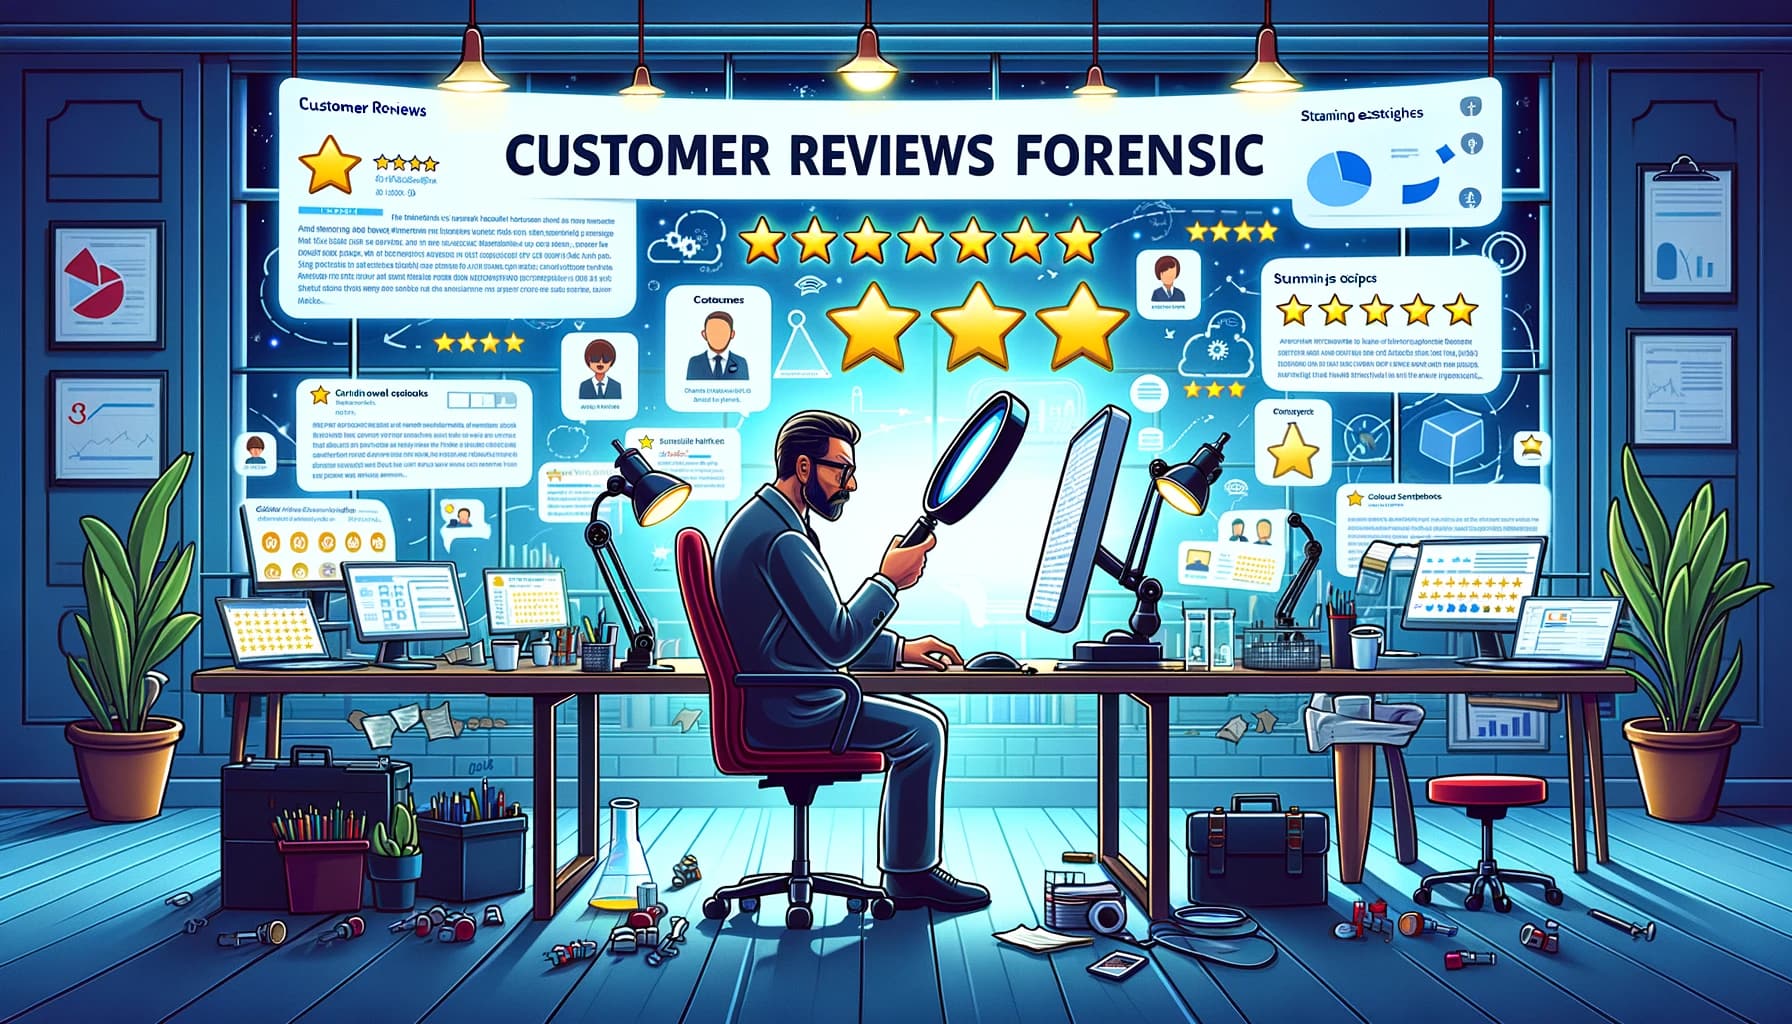 Customer Reviews Forensics: An Approach To Stunning Expert Insights